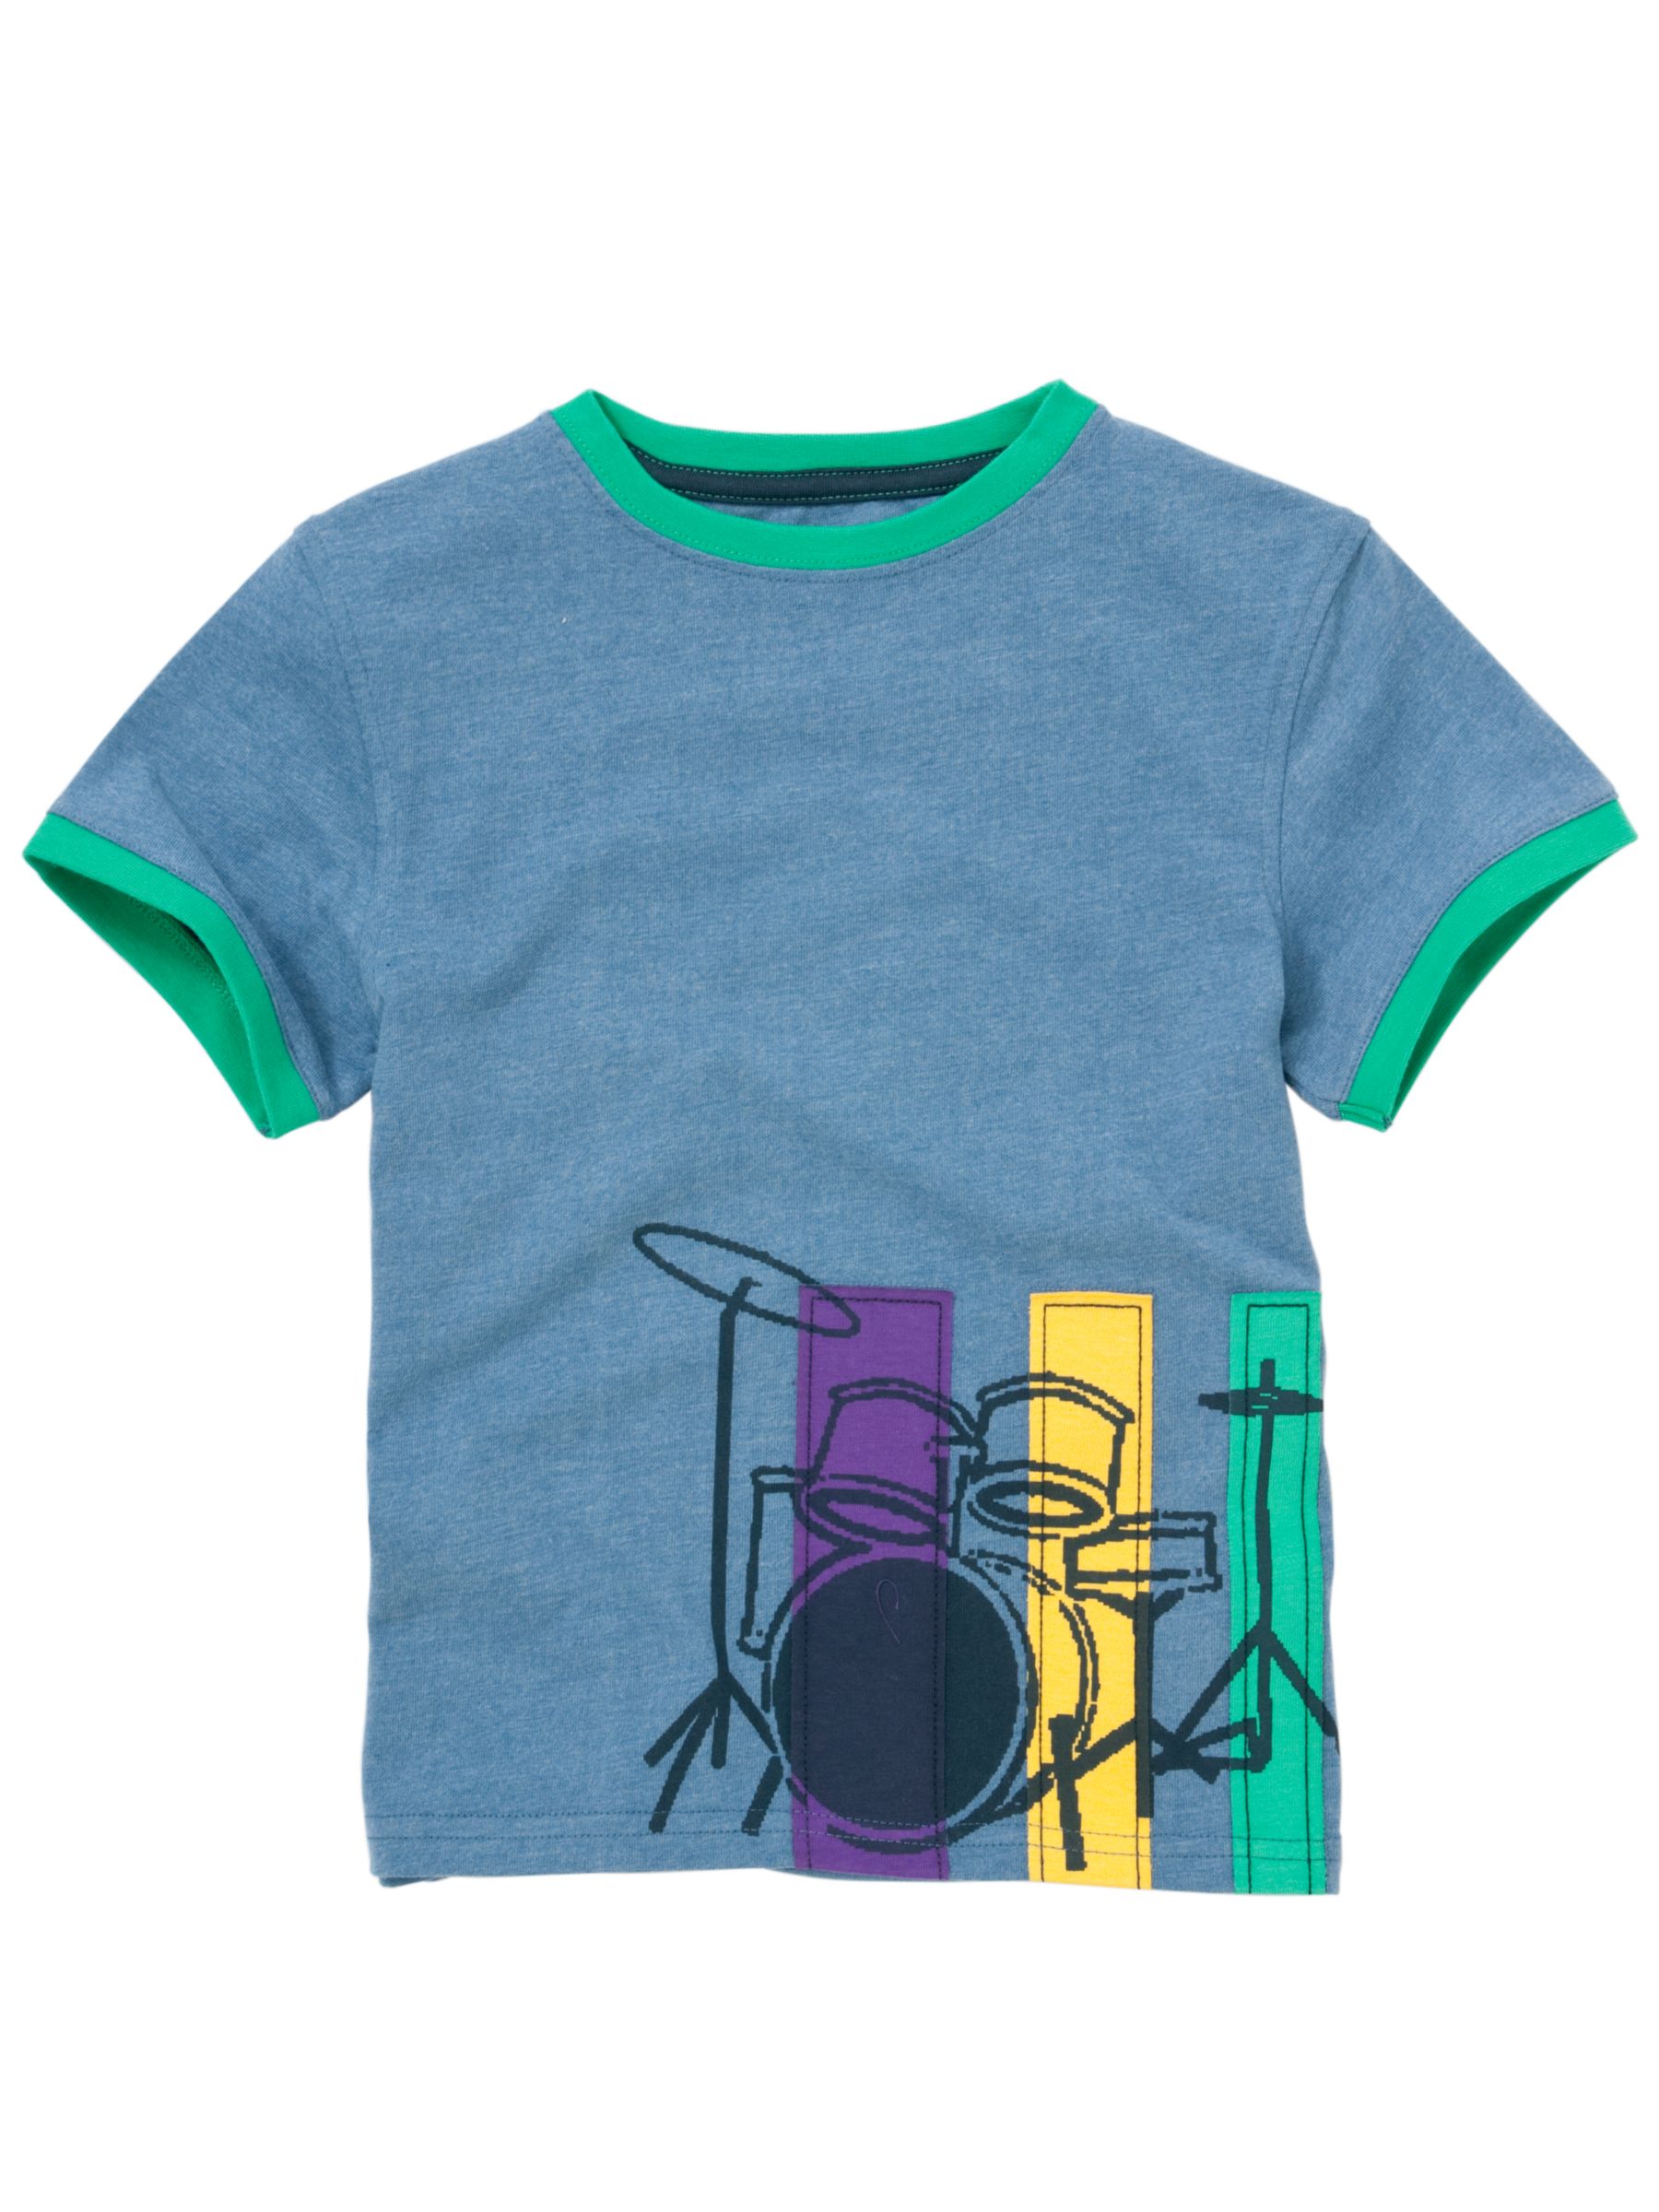 Drums Graphic T-Shirt, Blue